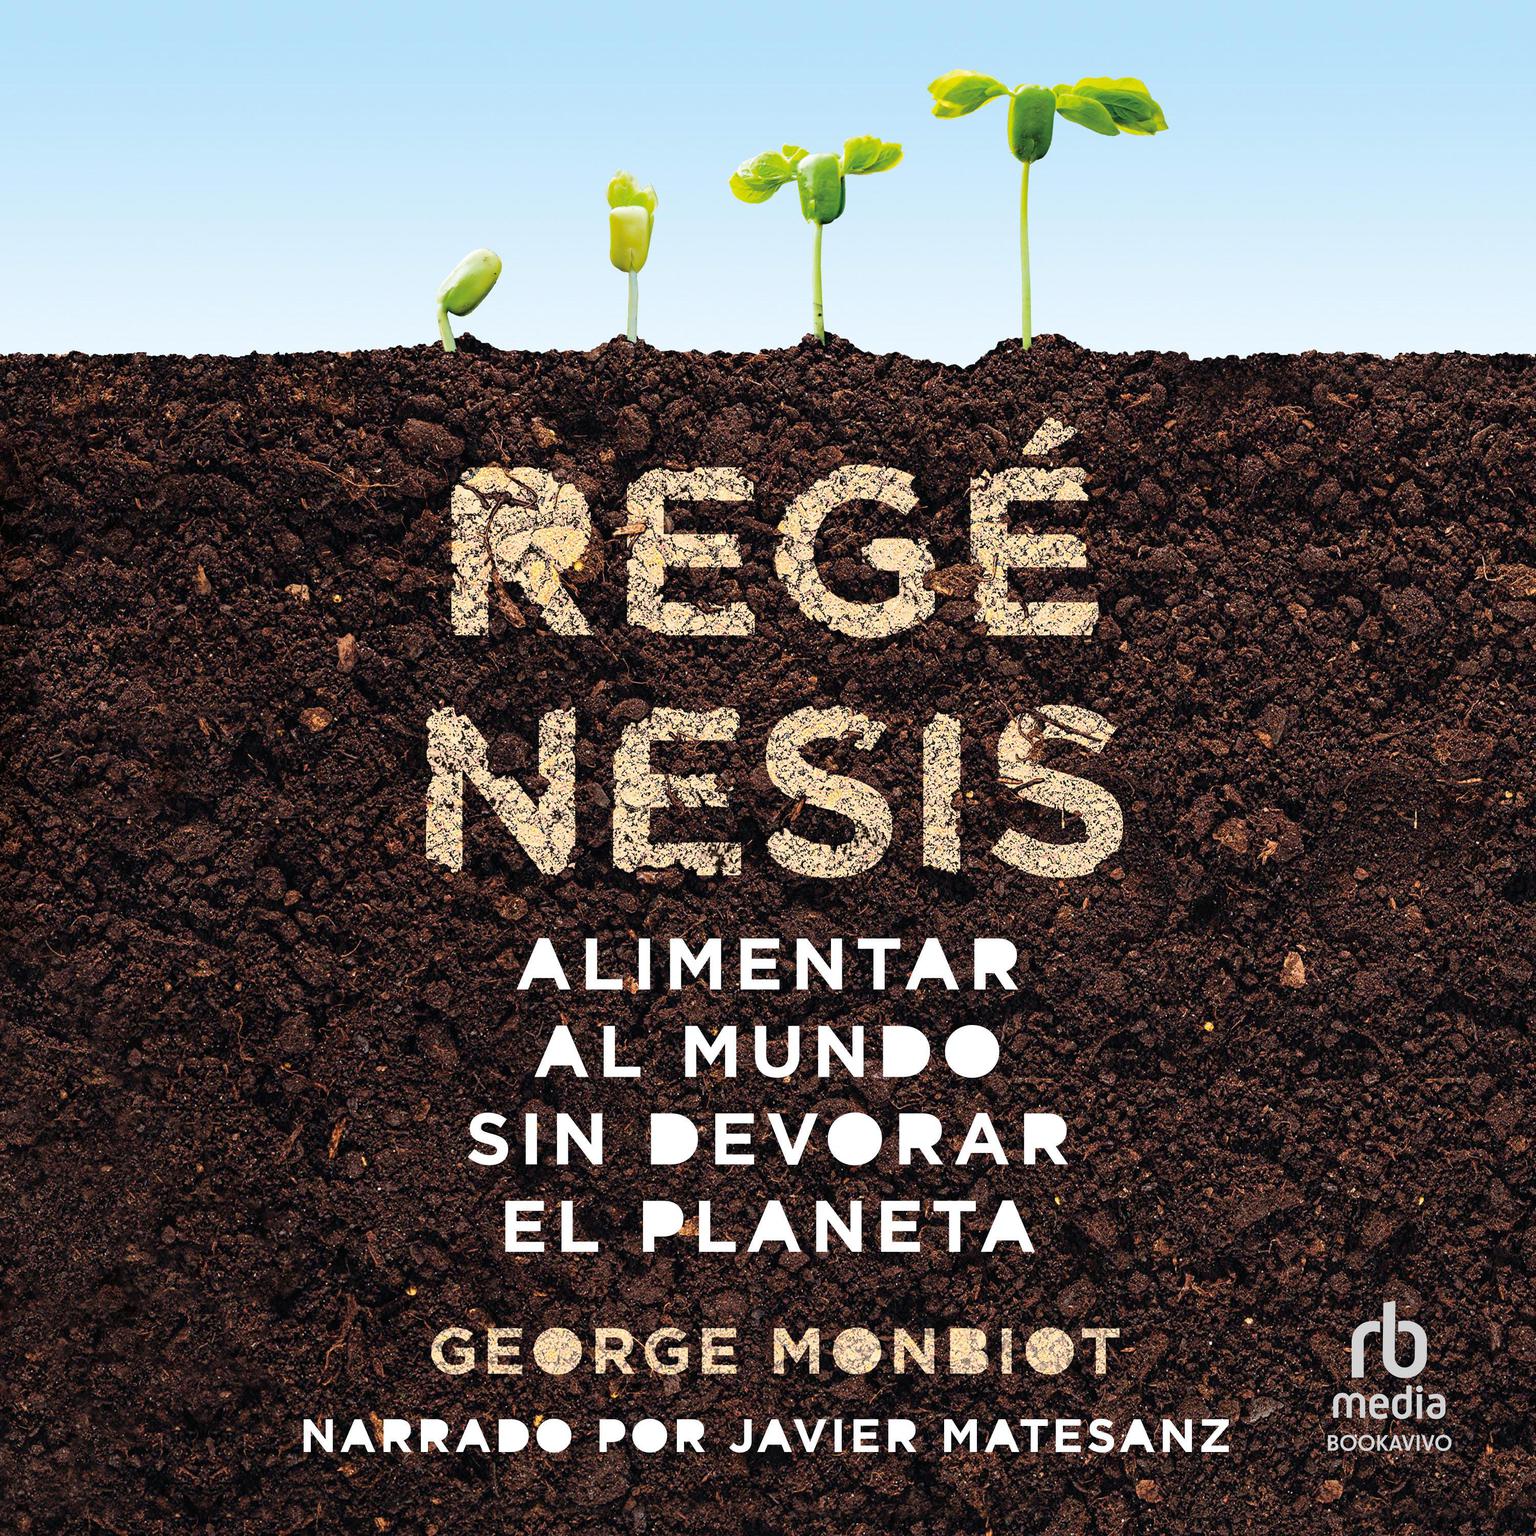 Regénesis: Alimentar al mundo sin devorar el planeta (Feeding the World Without Devouring the Planet) Audiobook, by George Monibot